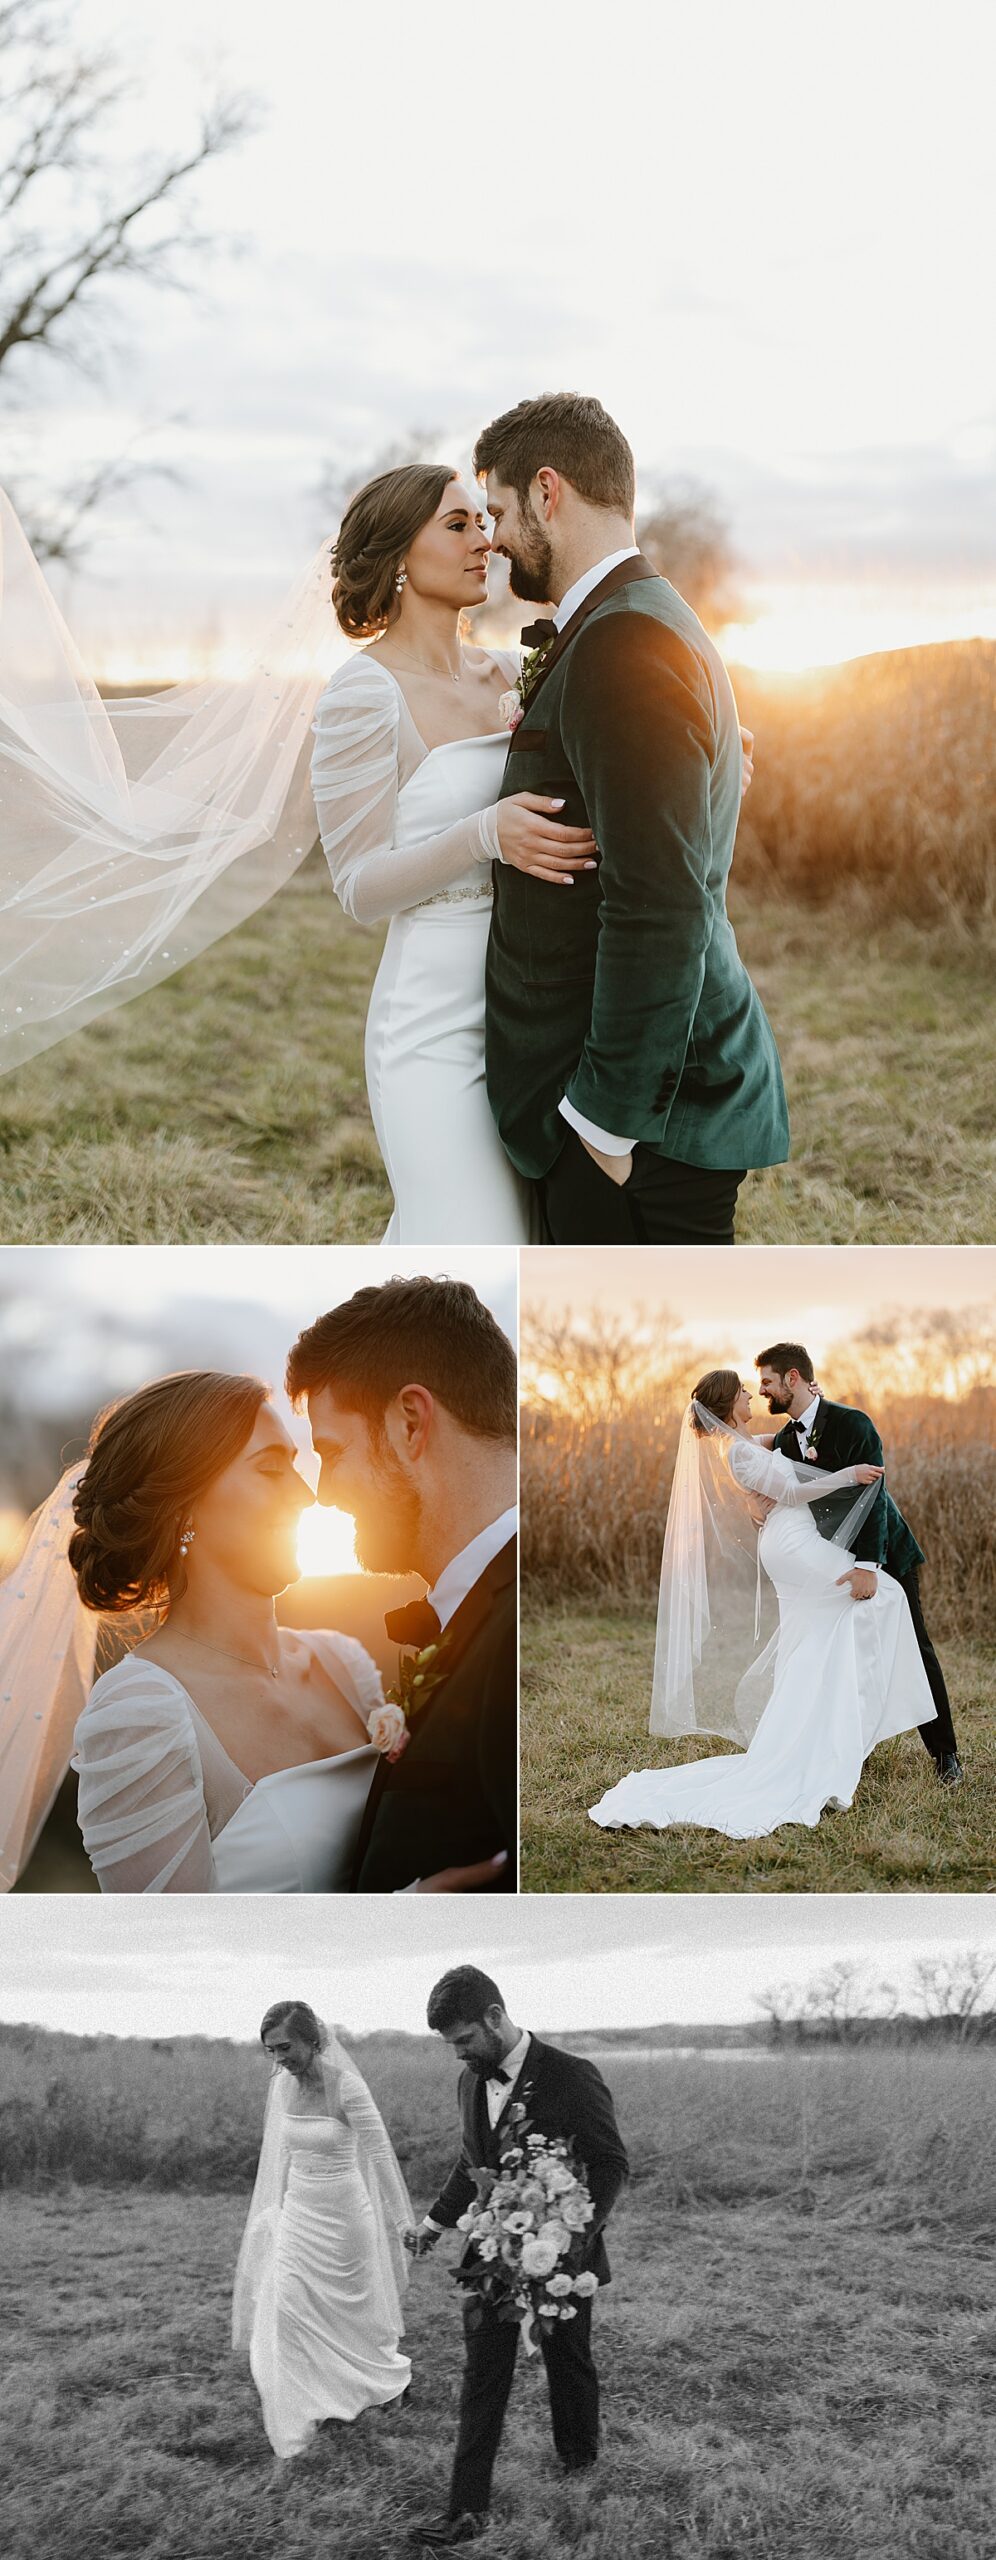 Romantic sunset bride and groom portraits.